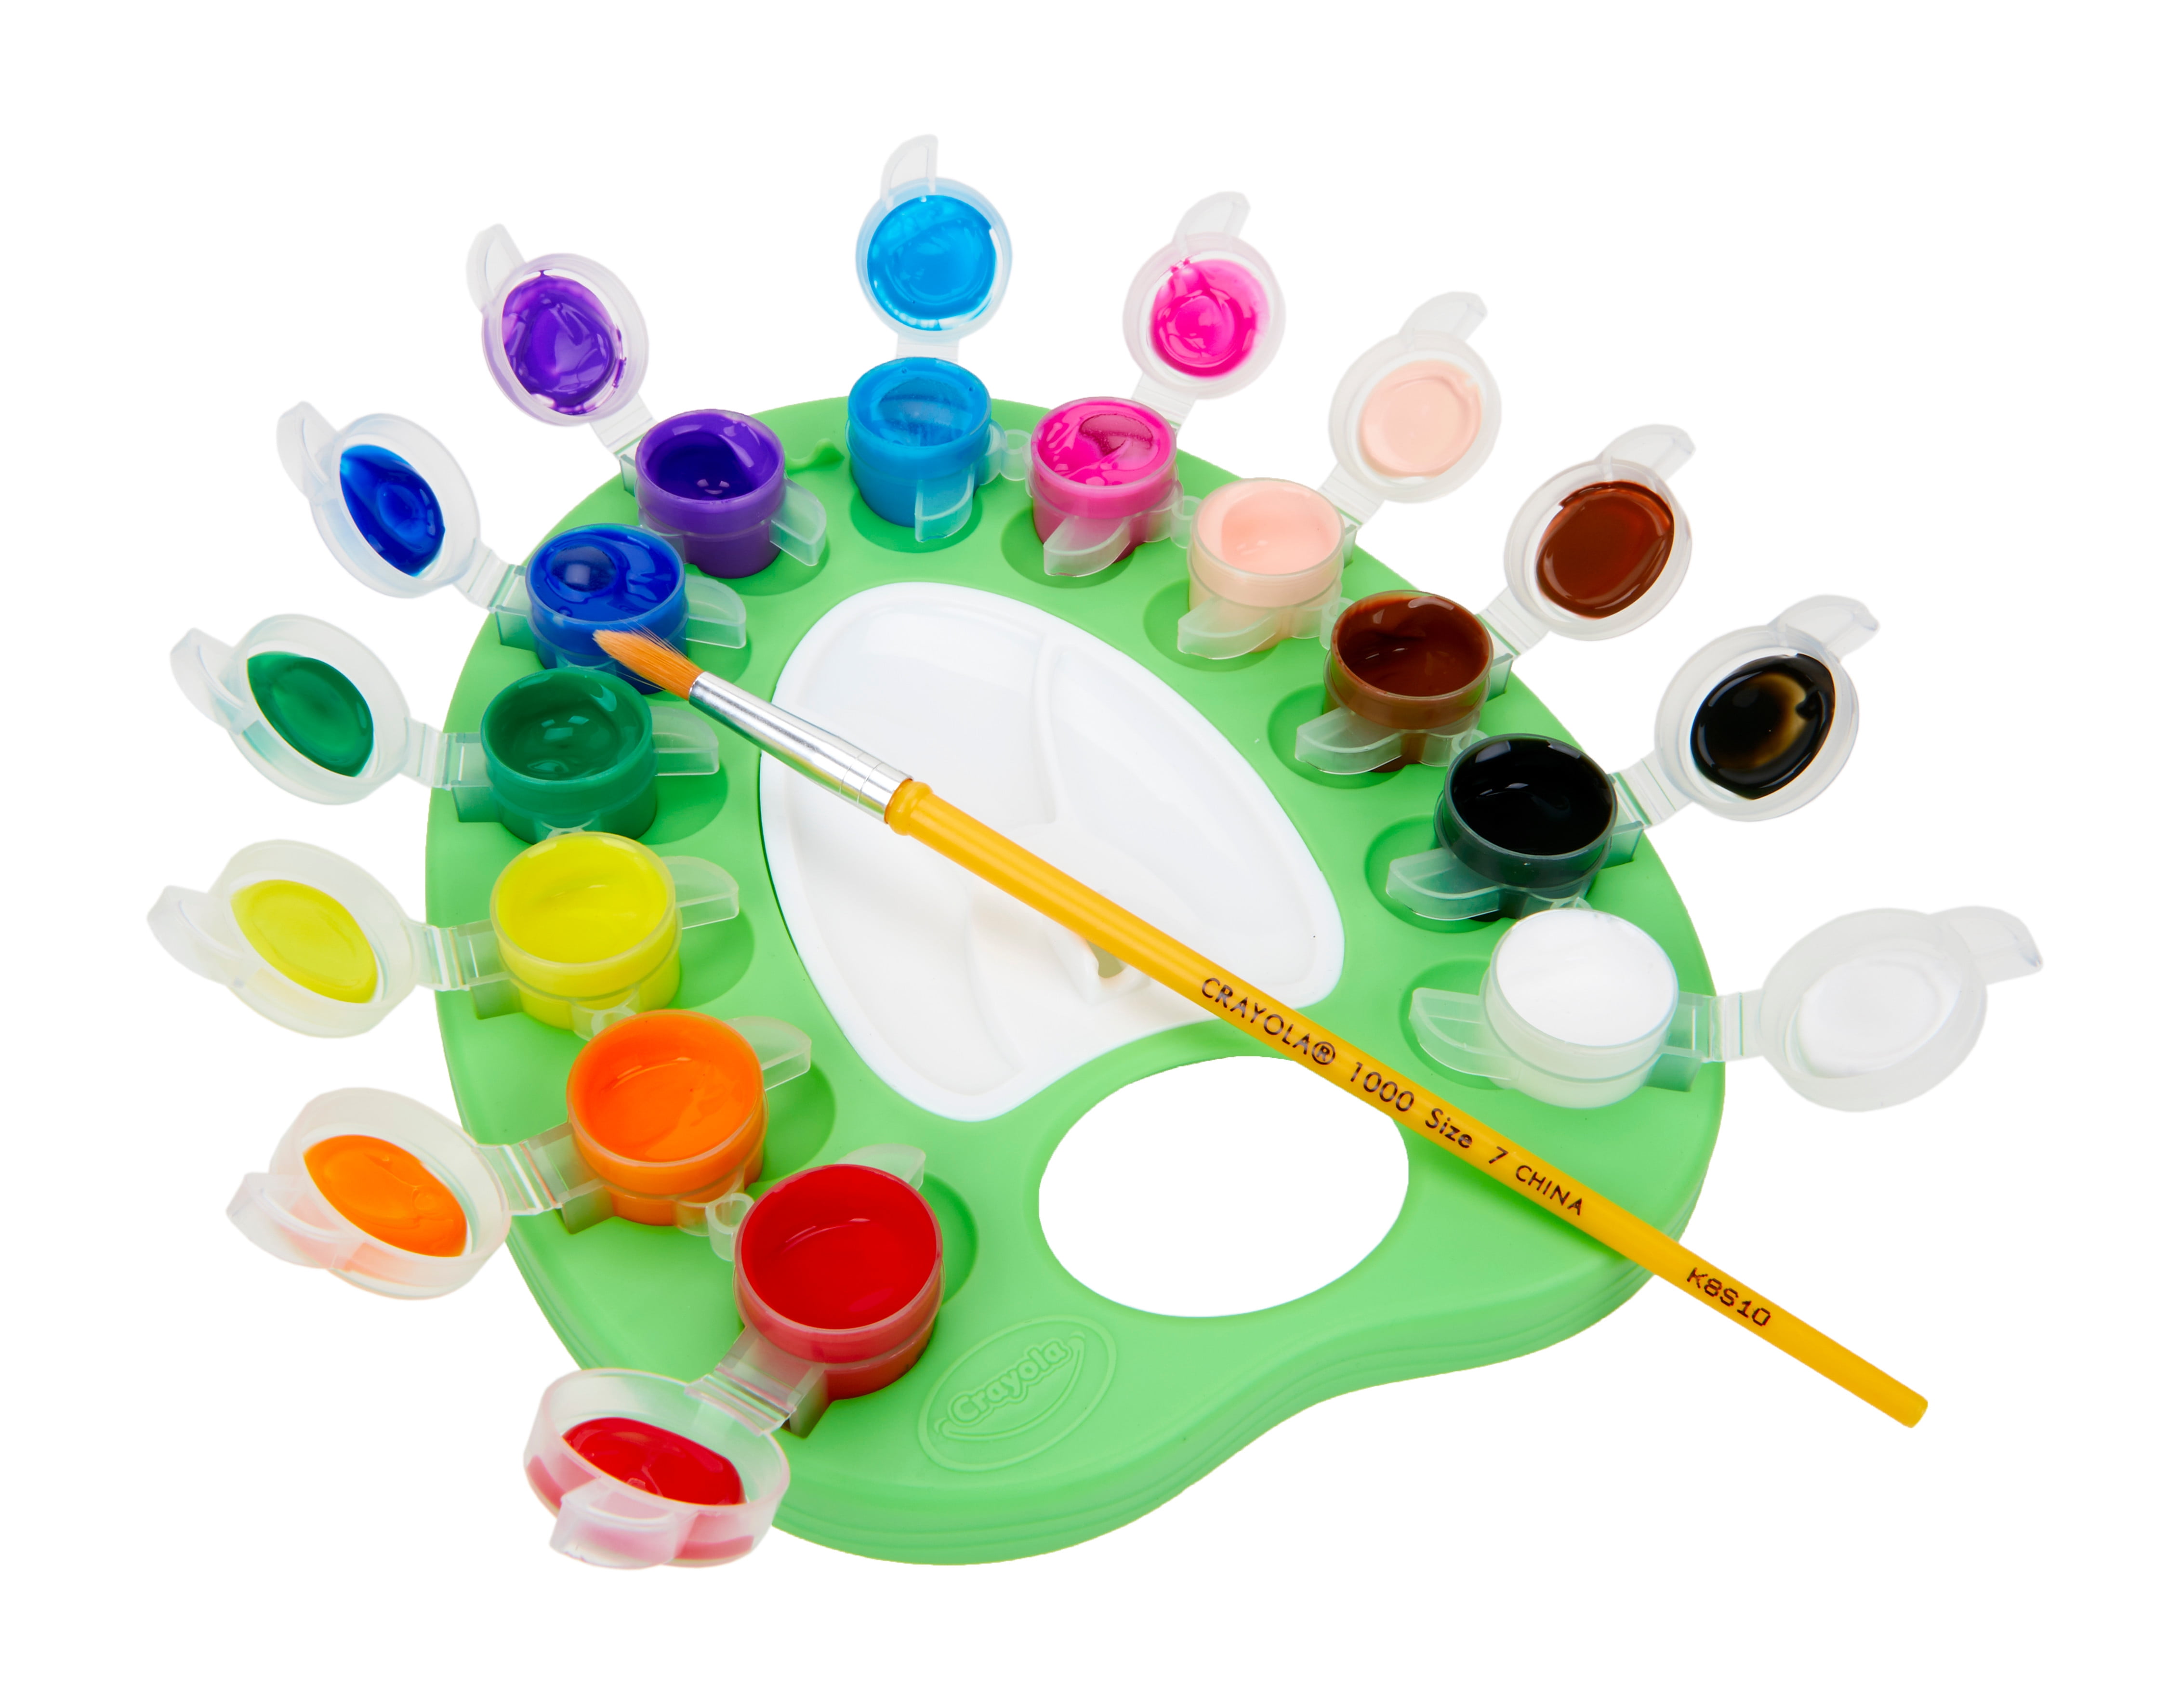 Crayola Washable Kids Paint Palette